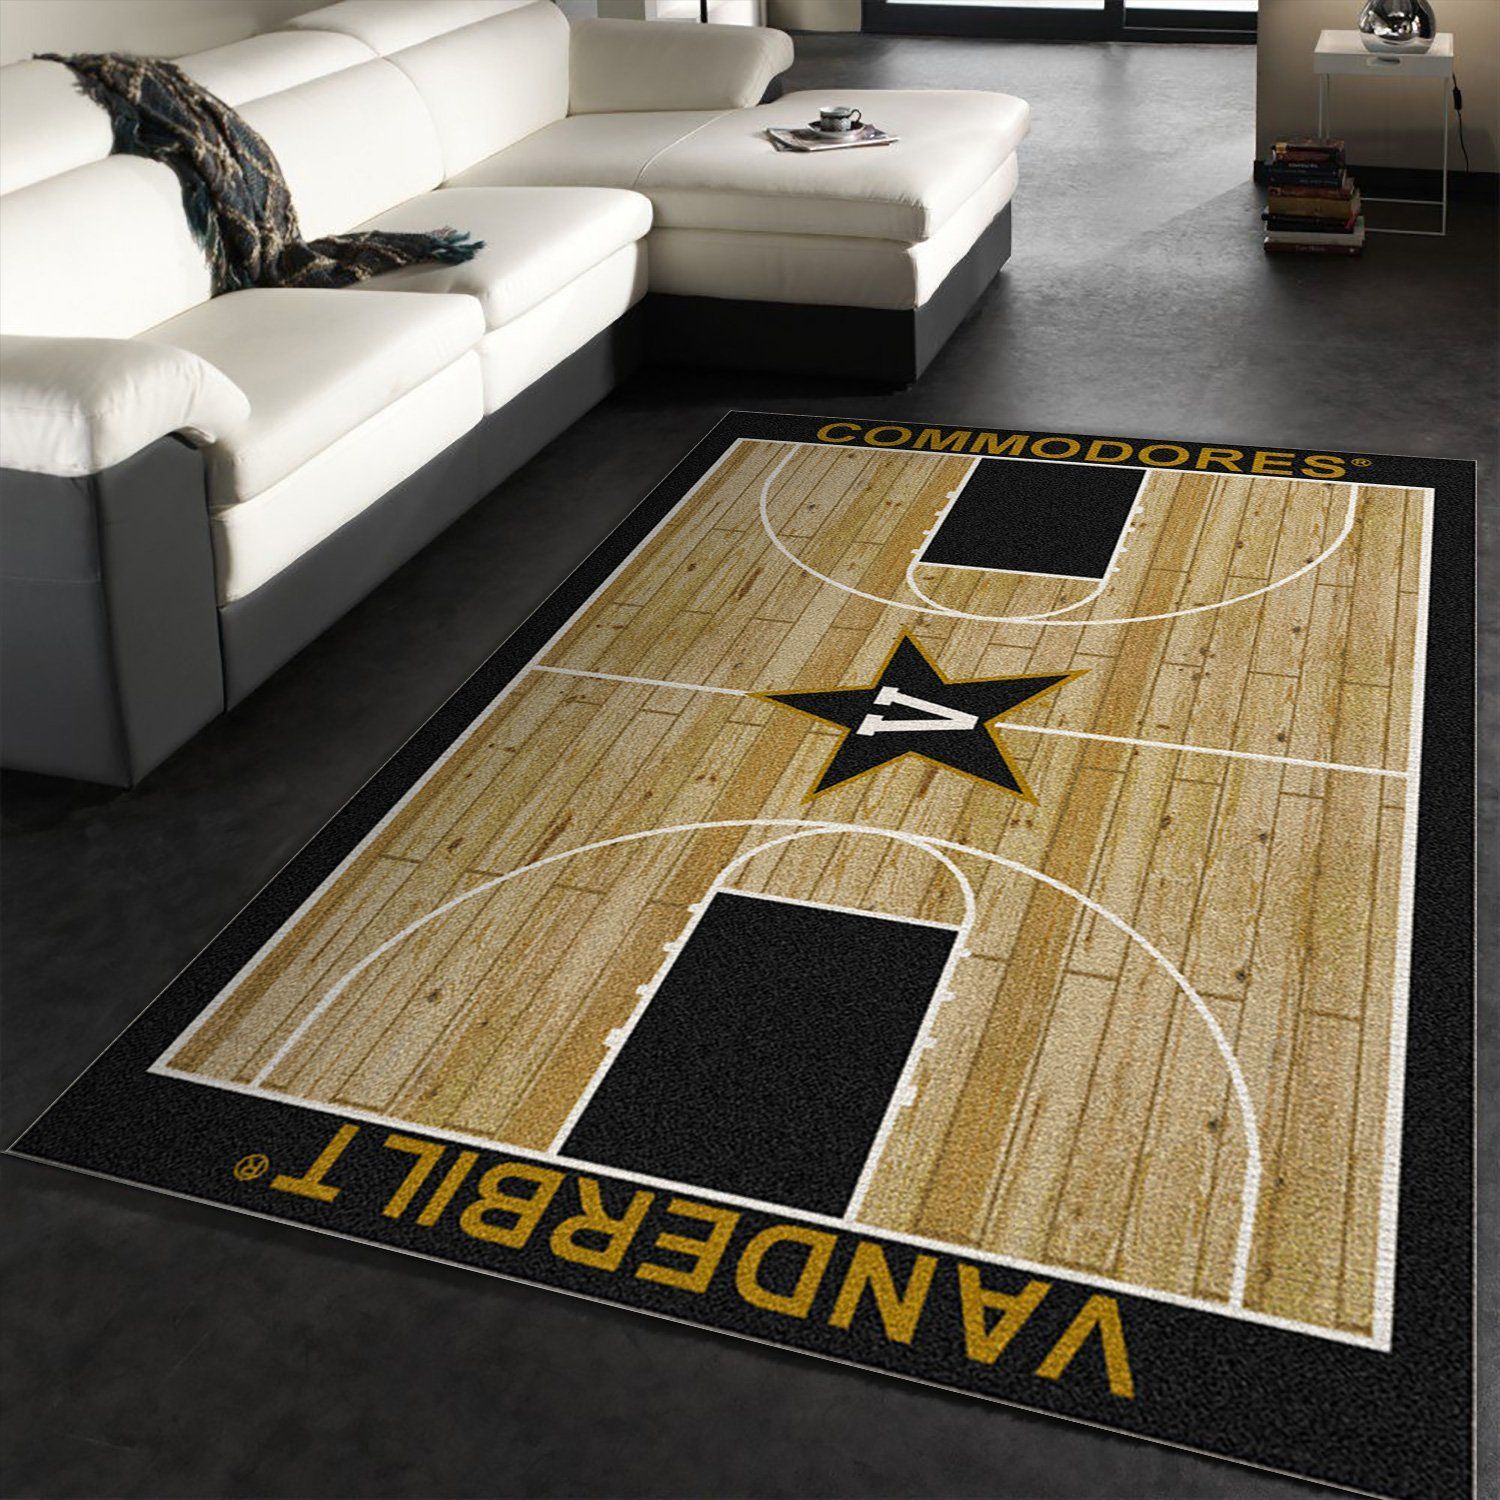 College Home Court Vanderbilt Basketball Team Logo Area Rug, Kitchen Rug, Home Decor Floor Decor - Indoor Outdoor Rugs 1